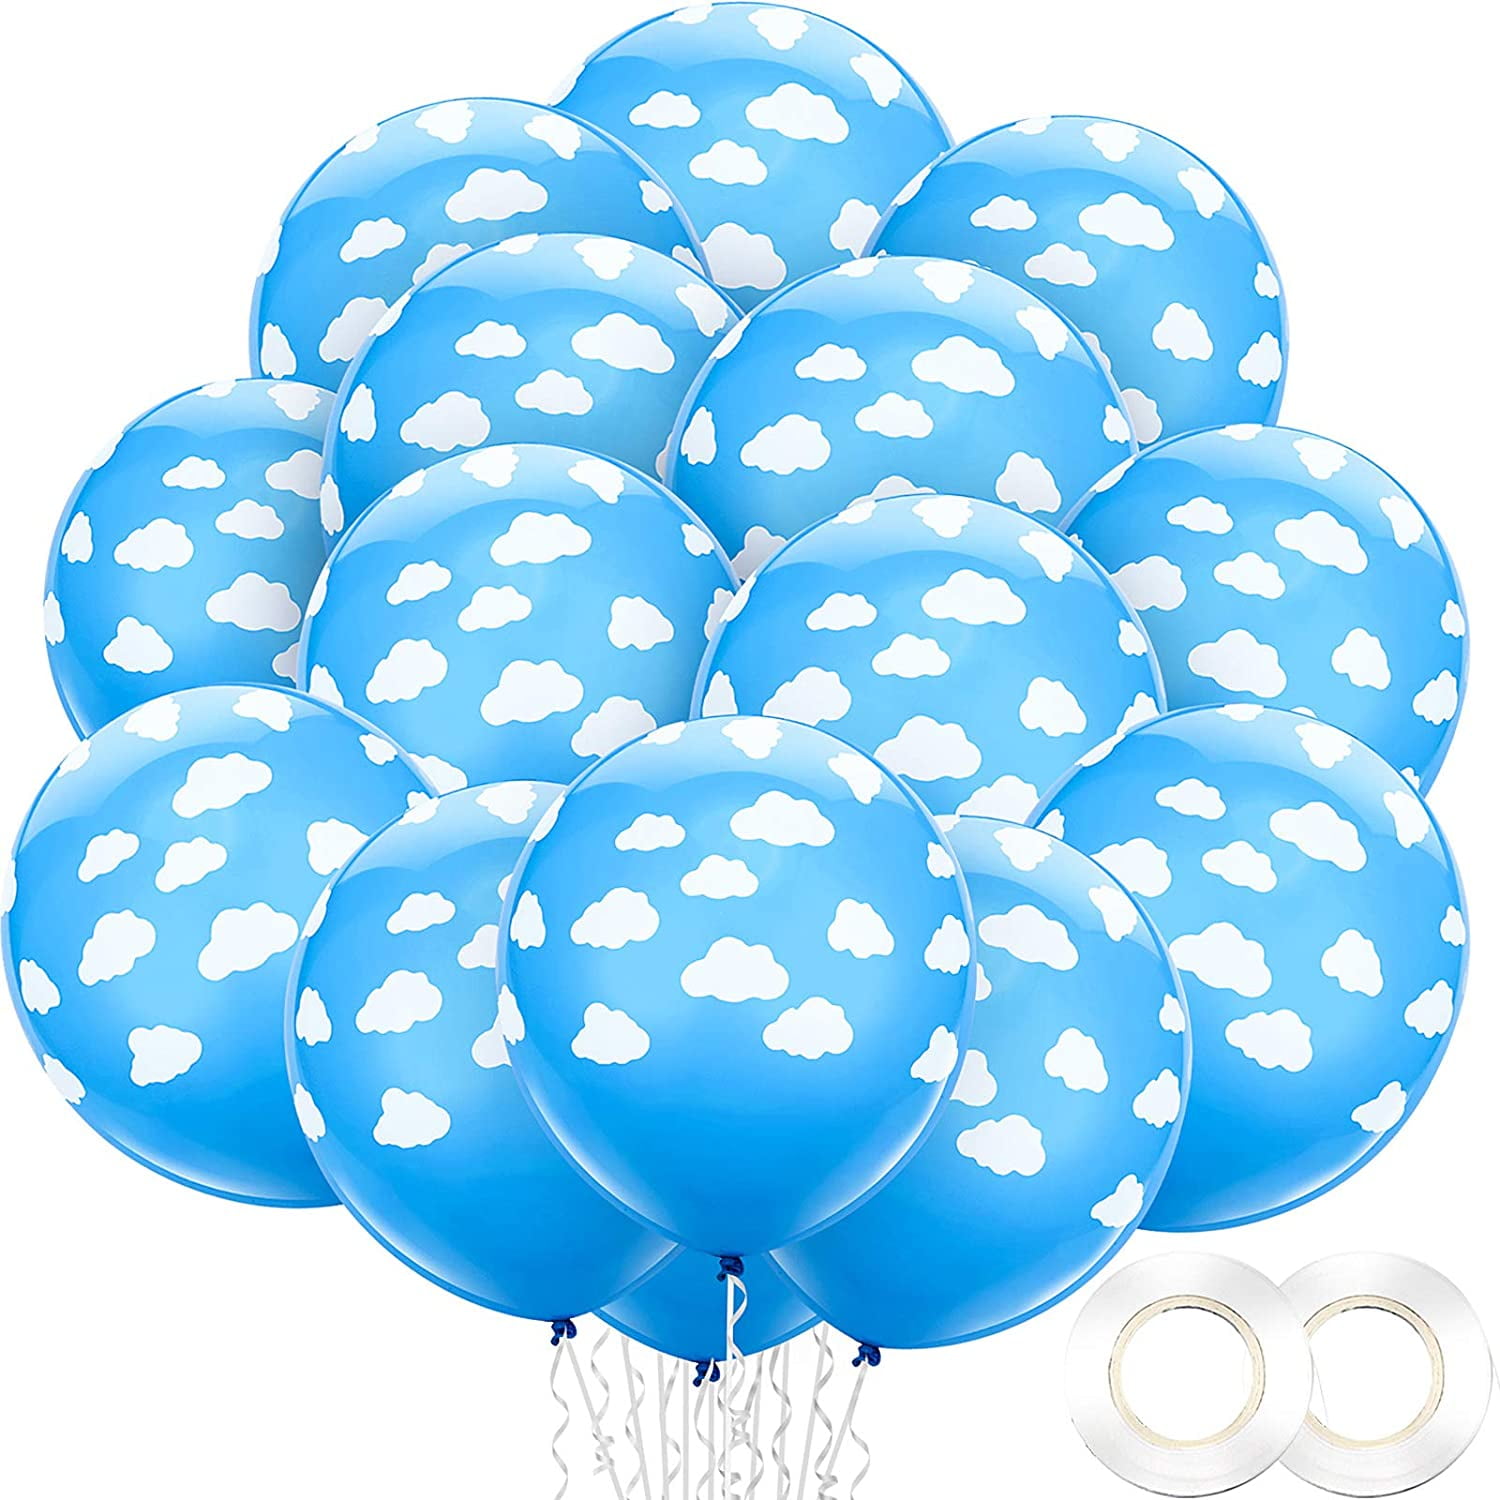 12" Printed Latex Balloons Blue Asst pack of 25 Hot Air Balloon Baby Boy 